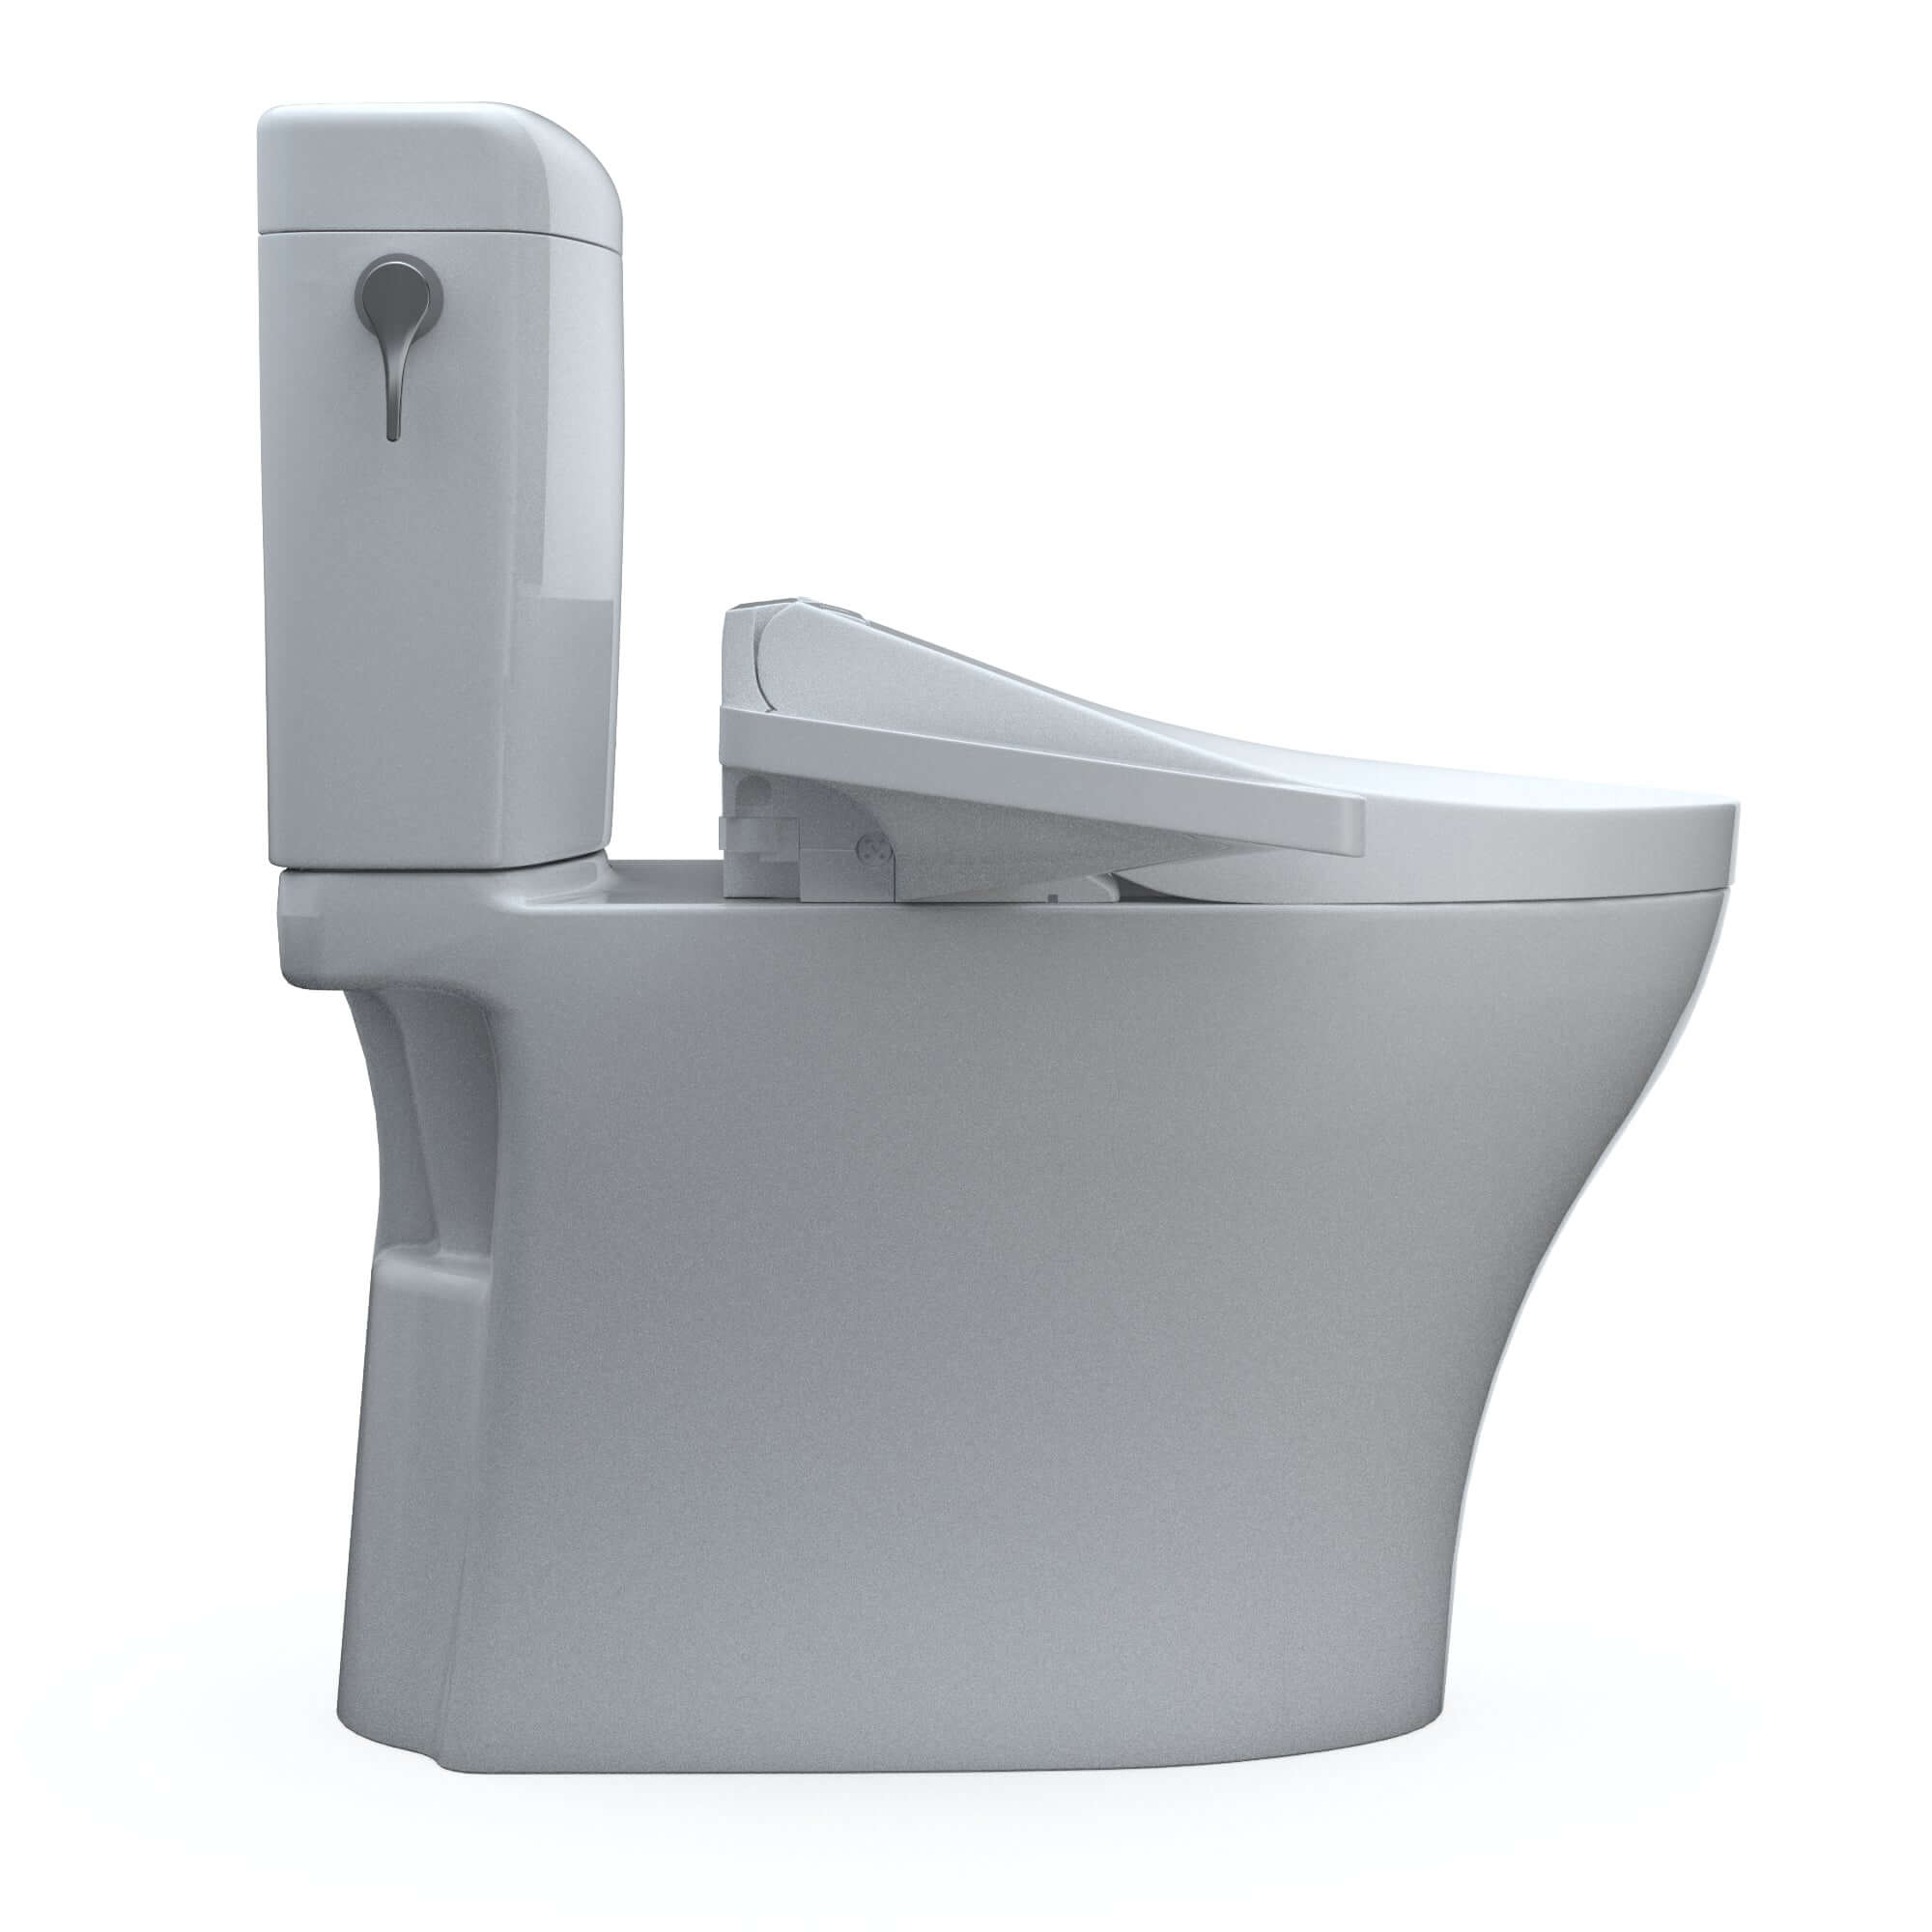 TOTO WASHLET+ Aquia IV Cube Two-Piece Elongated Dual Flush 1.28 and 0.9 GPF Toilet with C2 Bidet Seat, Cotton White - MW4363074CEMFGN#01